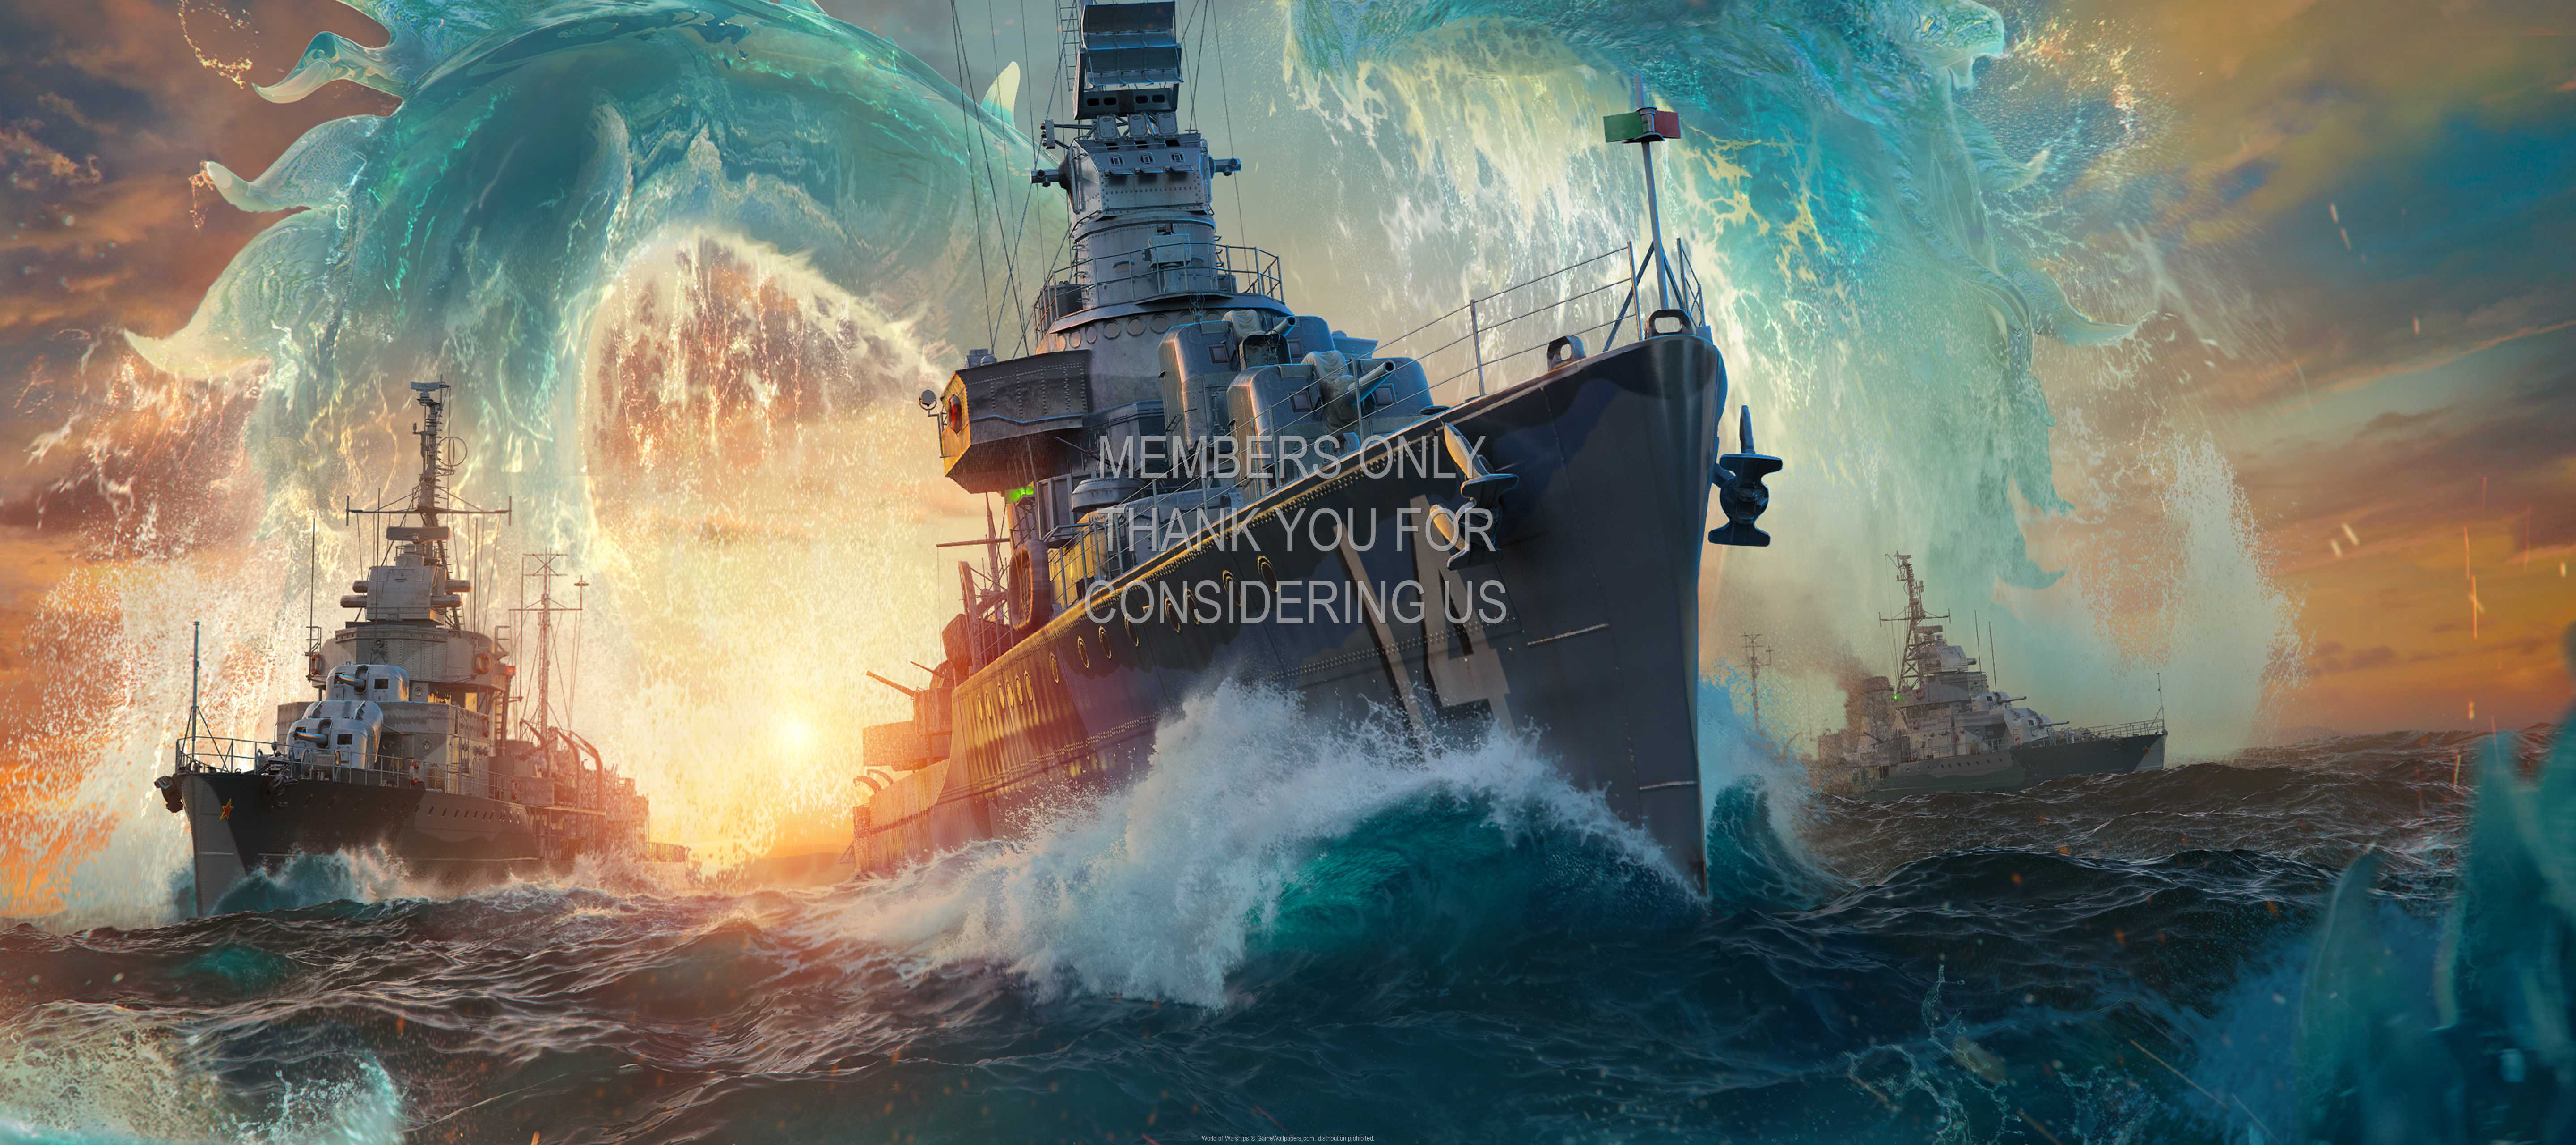 World of Warships 1440p%20Horizontal Mobile wallpaper or background 17